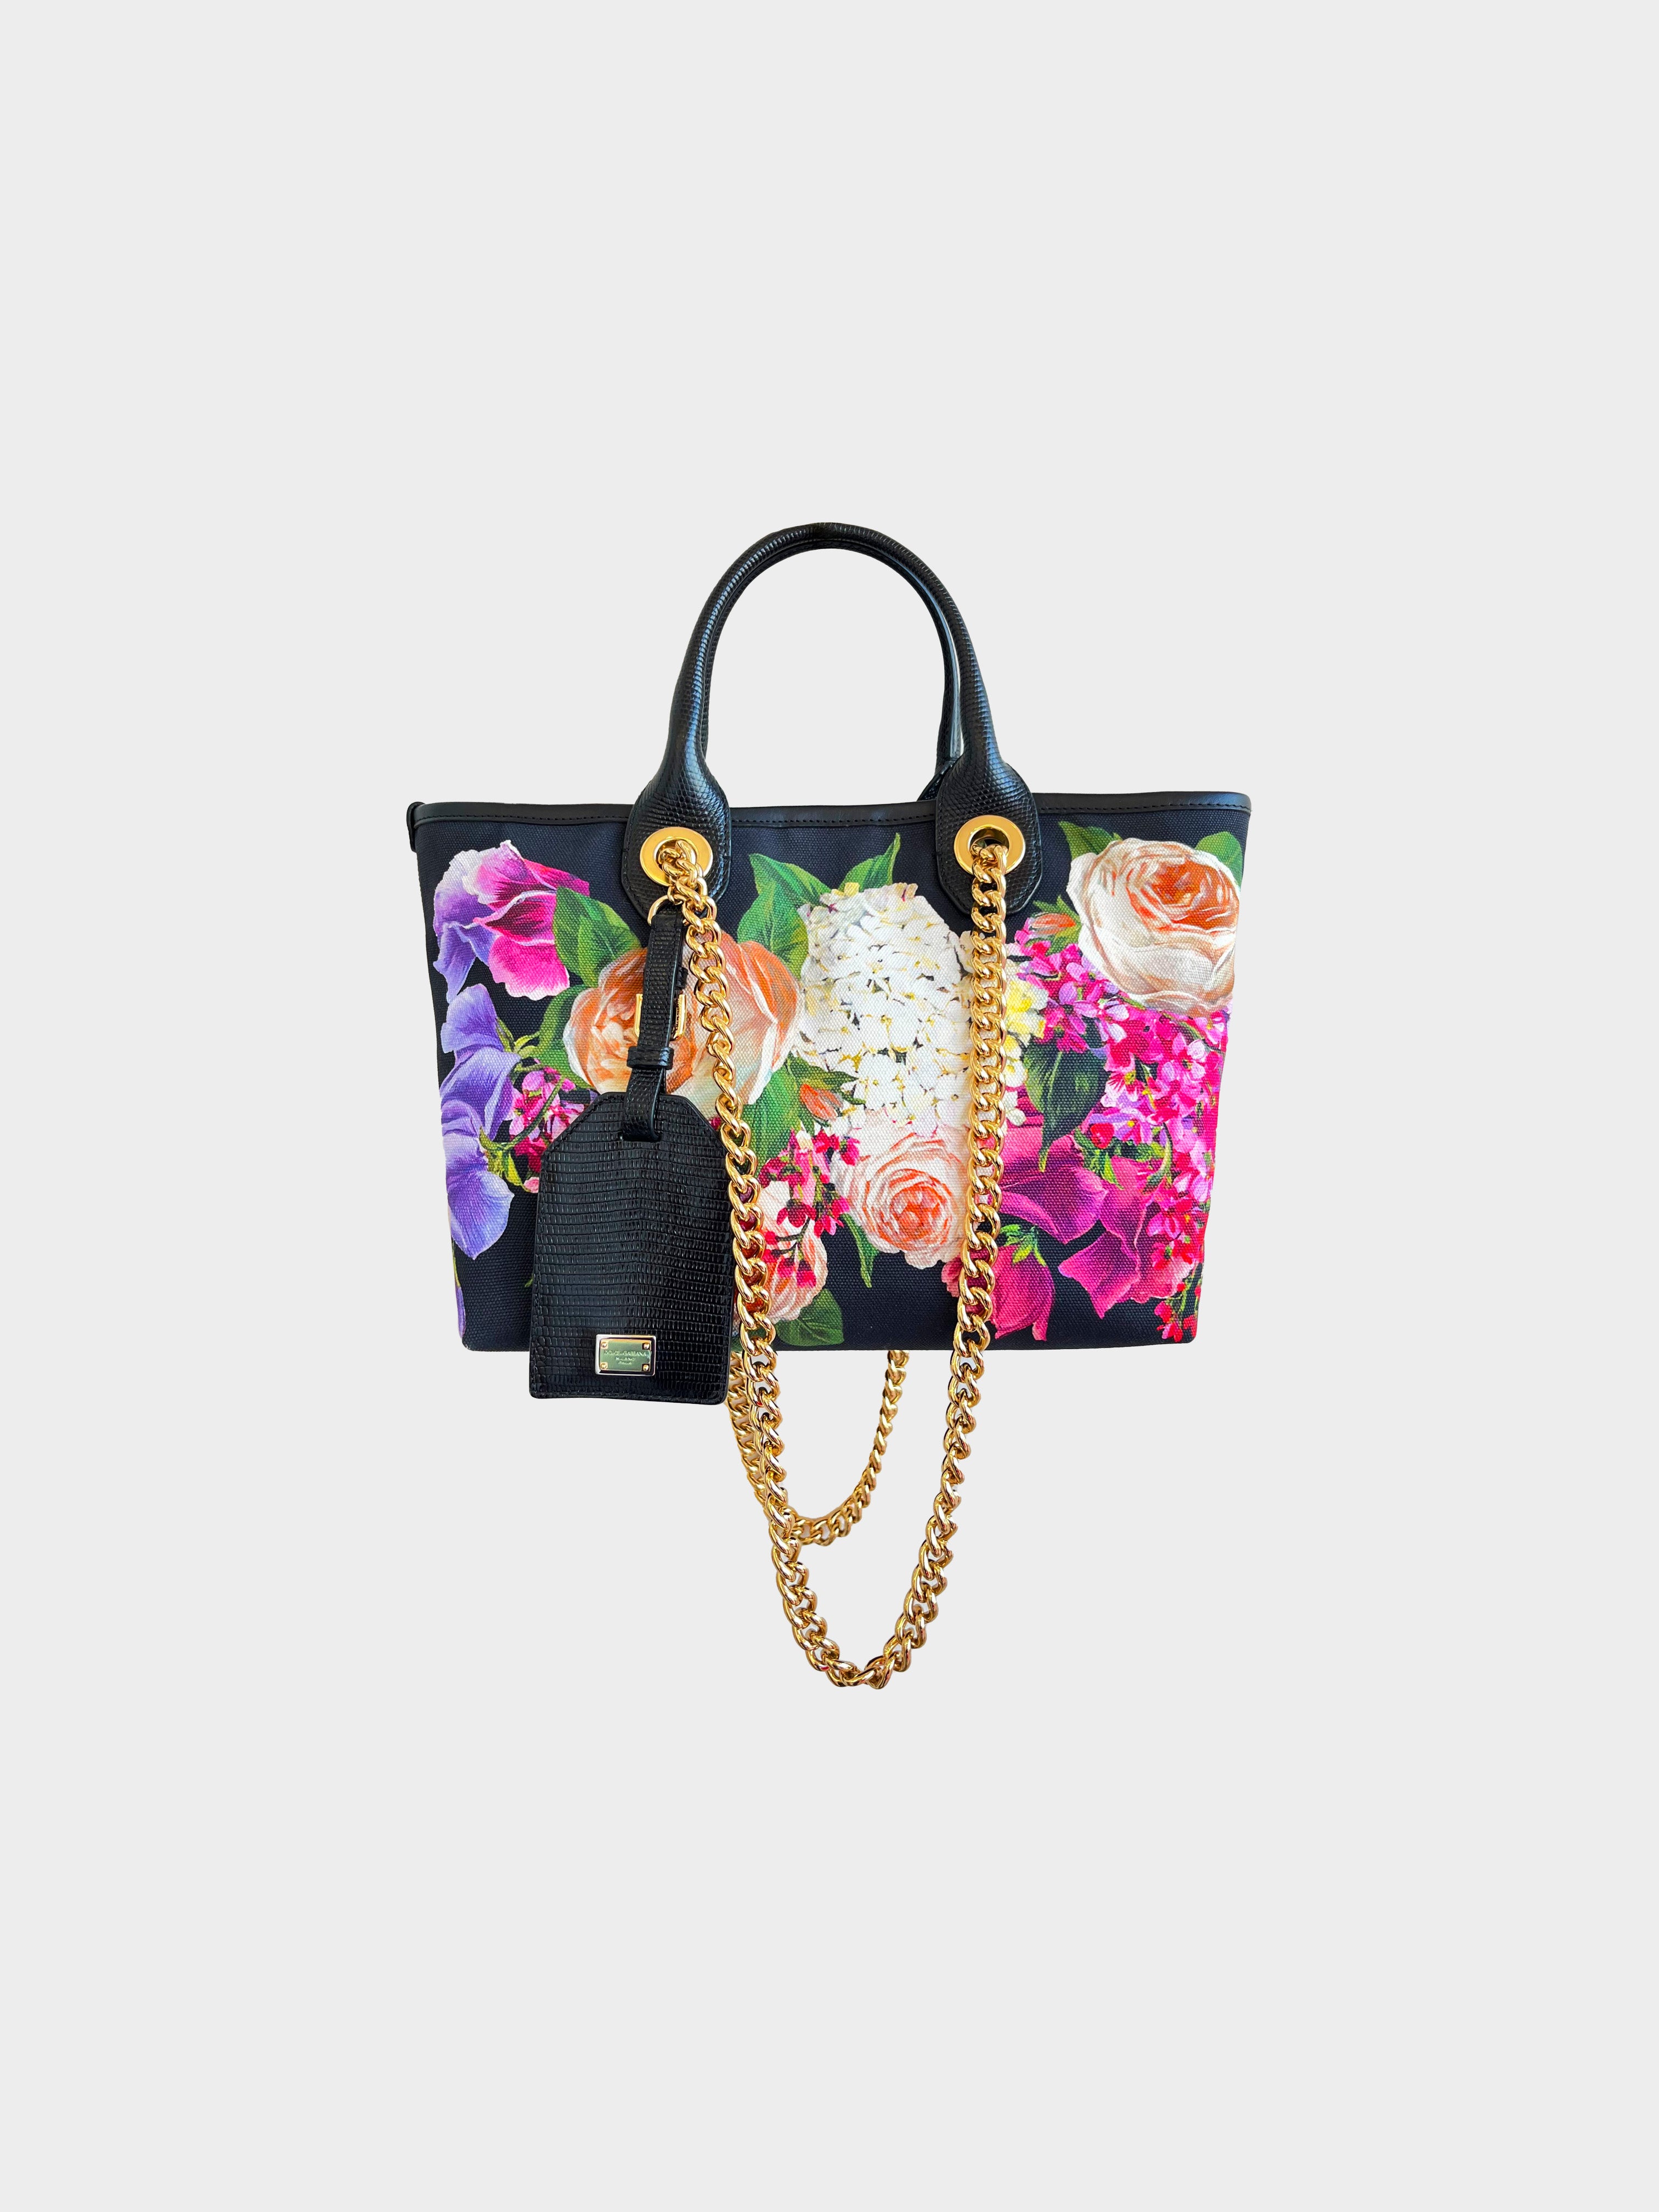 Dolce and Gabbana 2019 Floral Capri Tote Bag